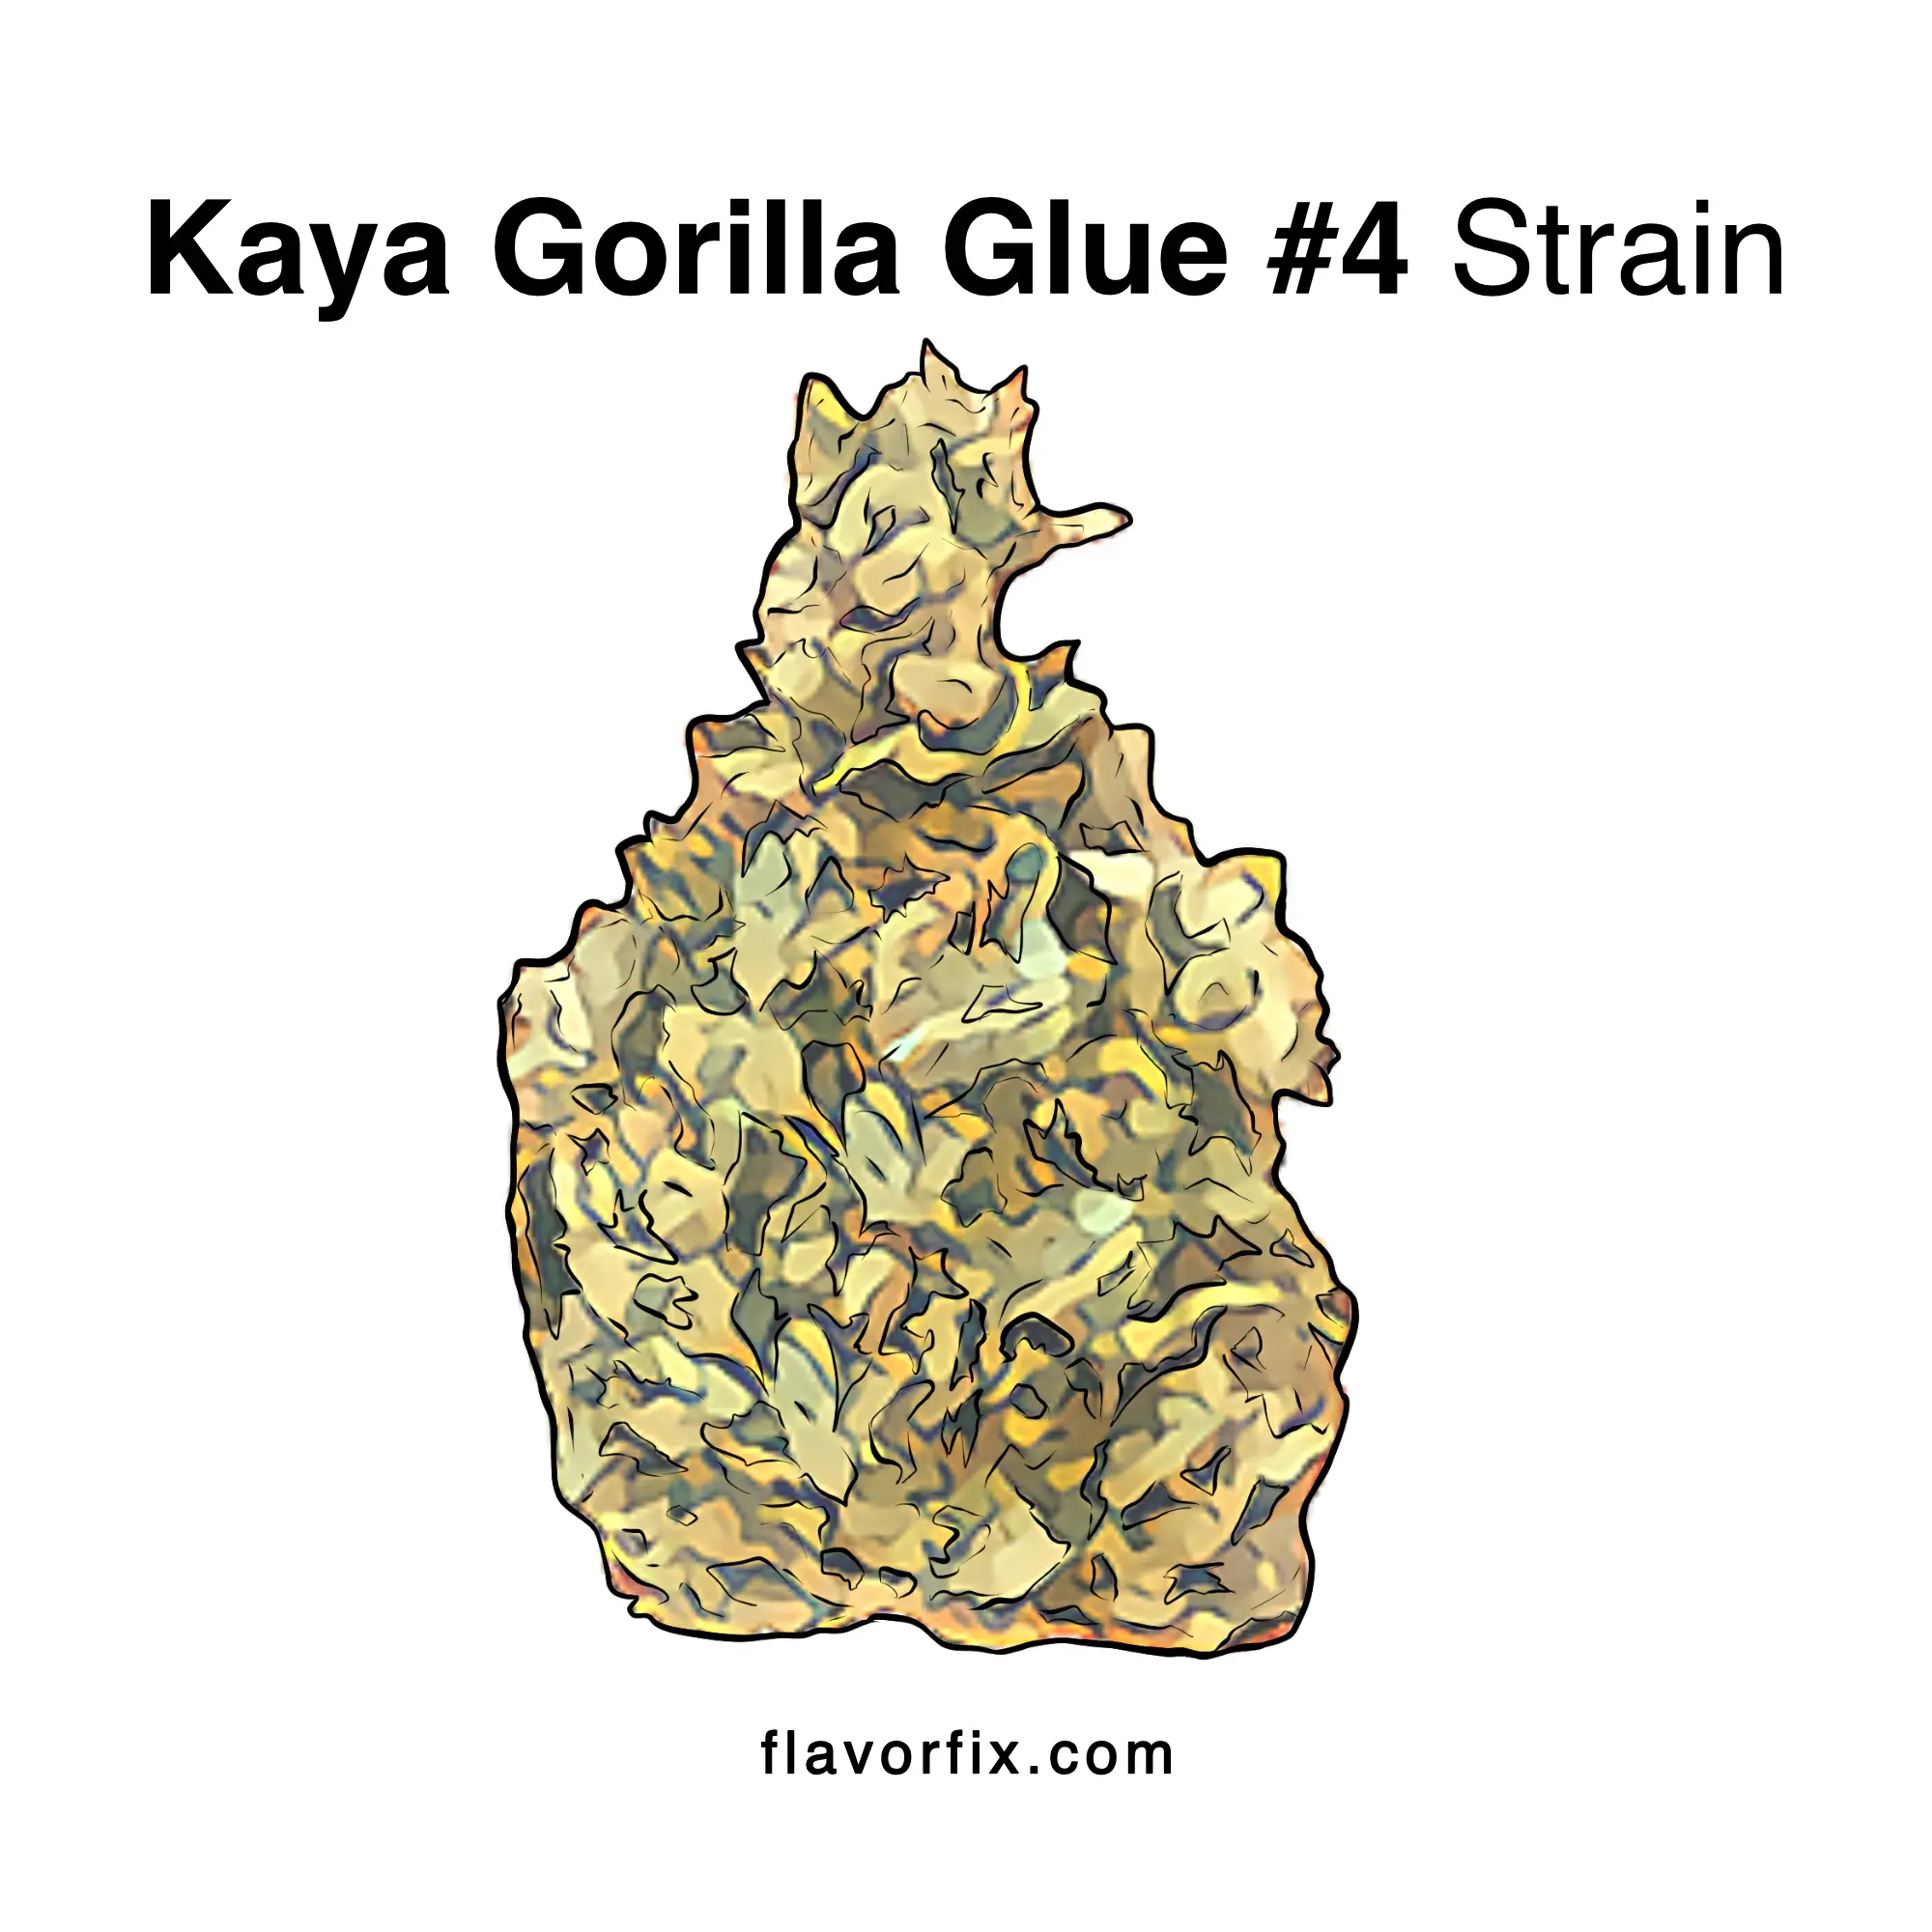 Kaya Gorilla Glue #4 Strain